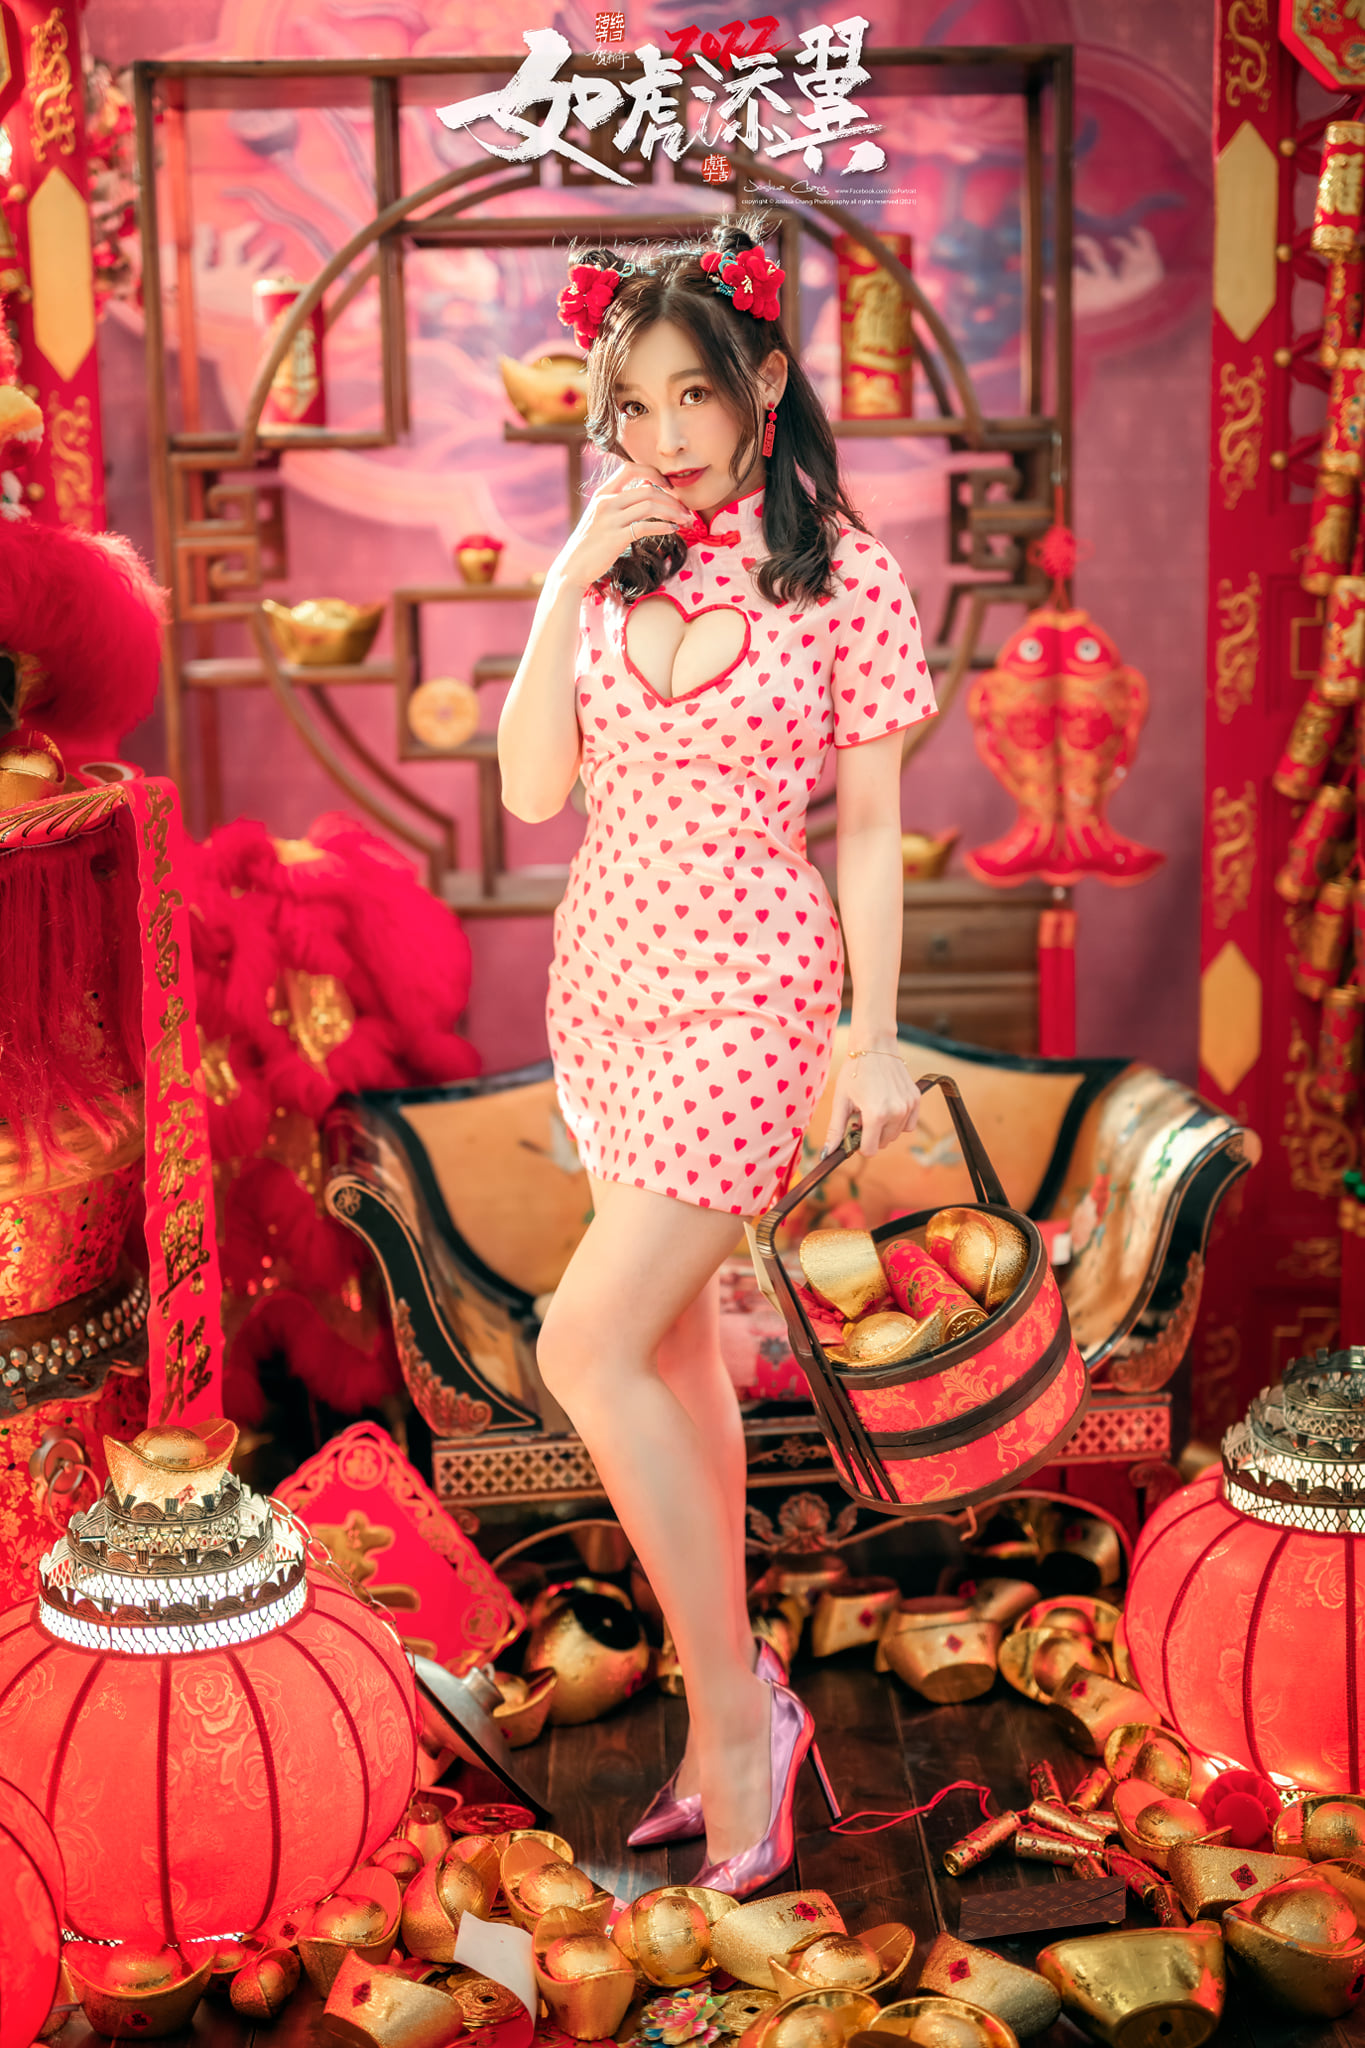 Polka Dots Dress Asian Women Oriental Long Hair Brunette Red Touching Face Finger On Lips Joshua Cha 1365x2048